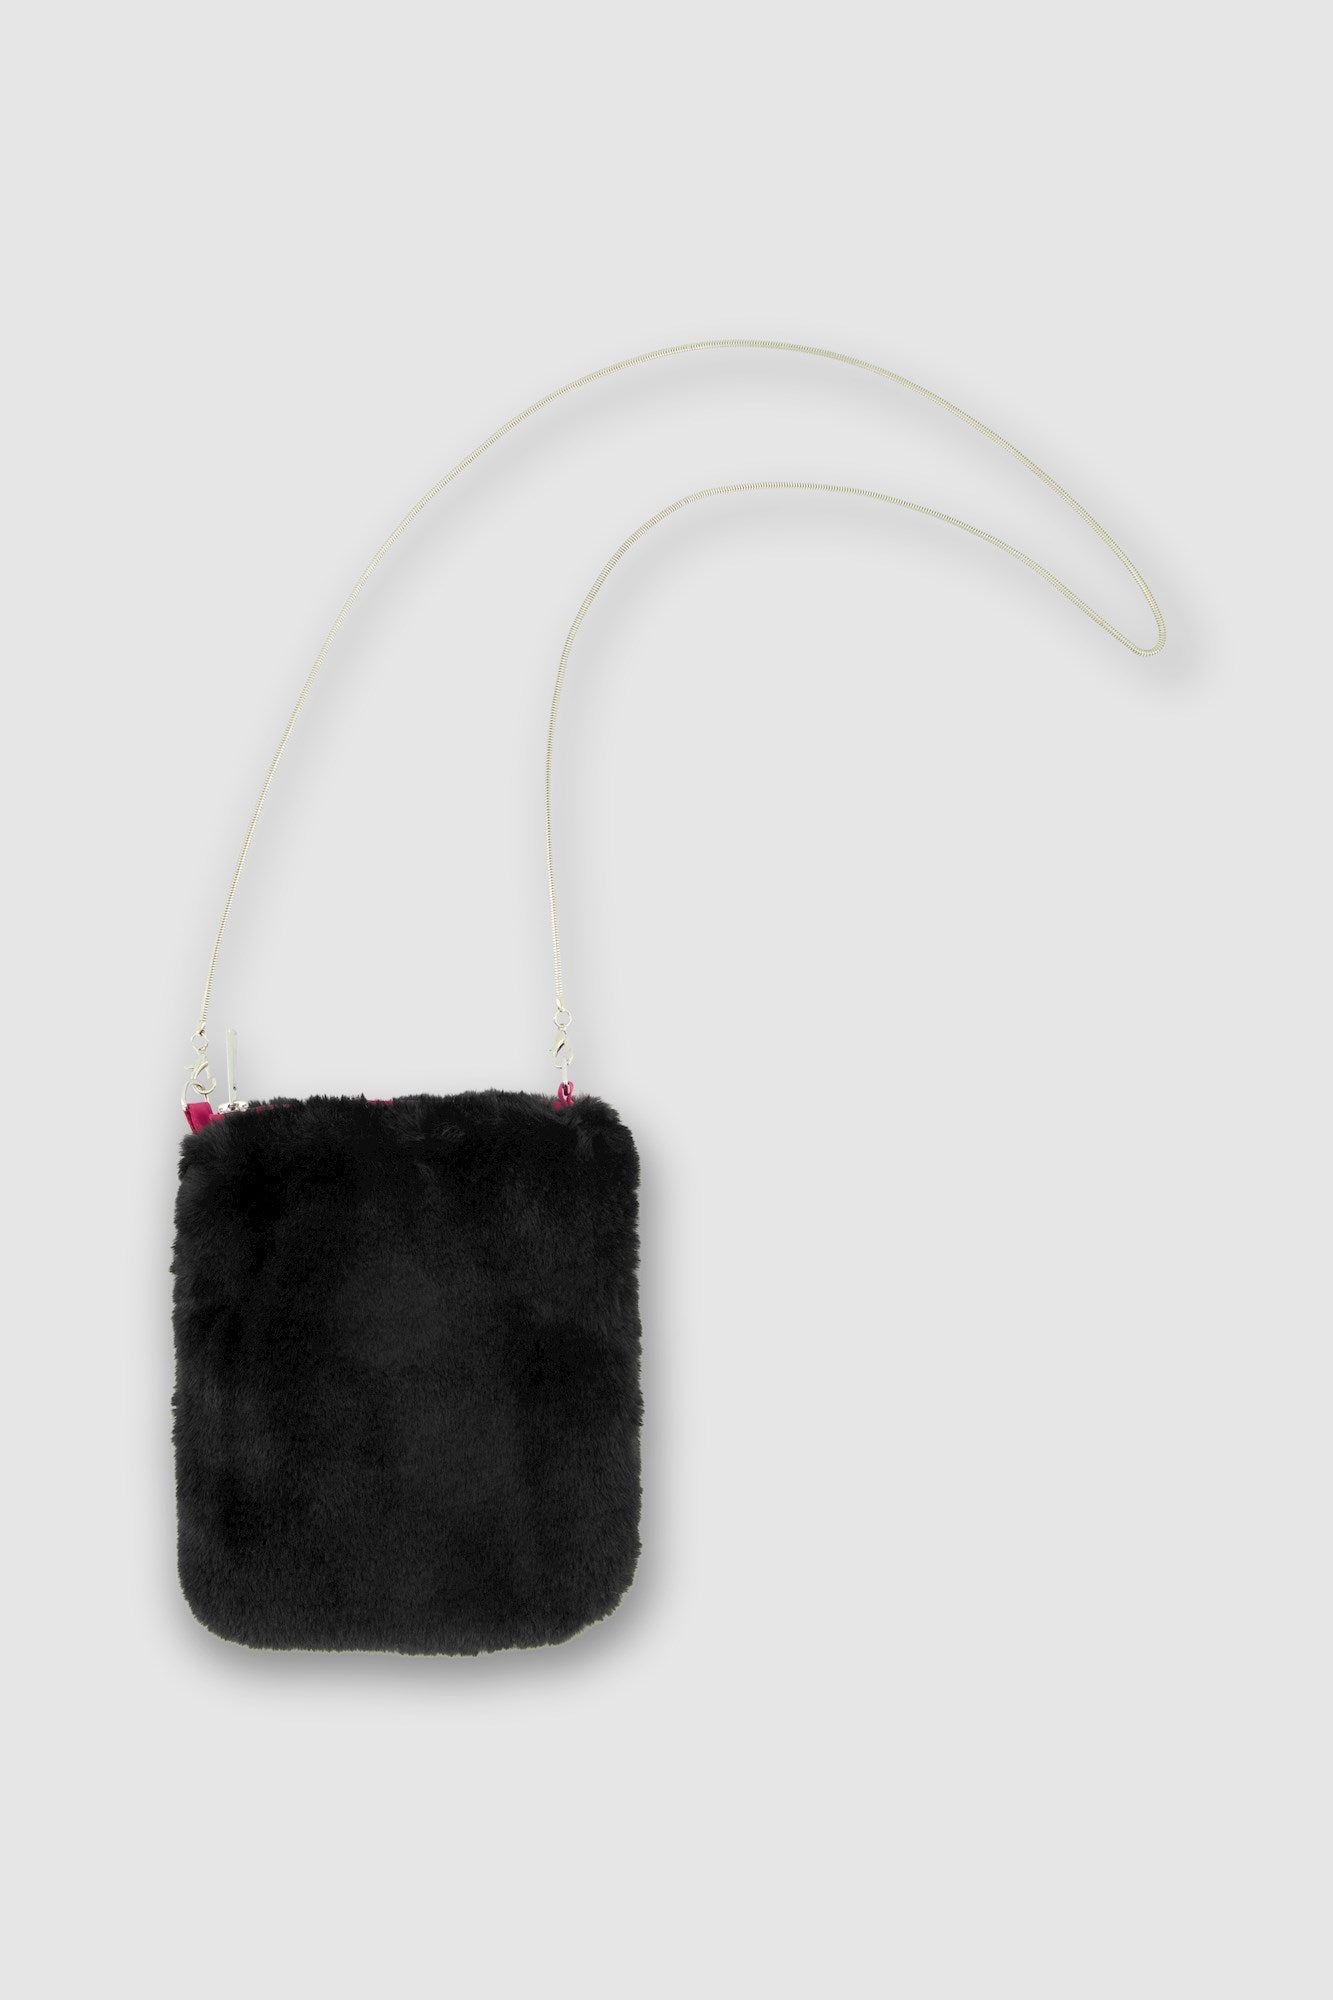 Rino & Pelle - Doxy Small Shoulder Bag - Black